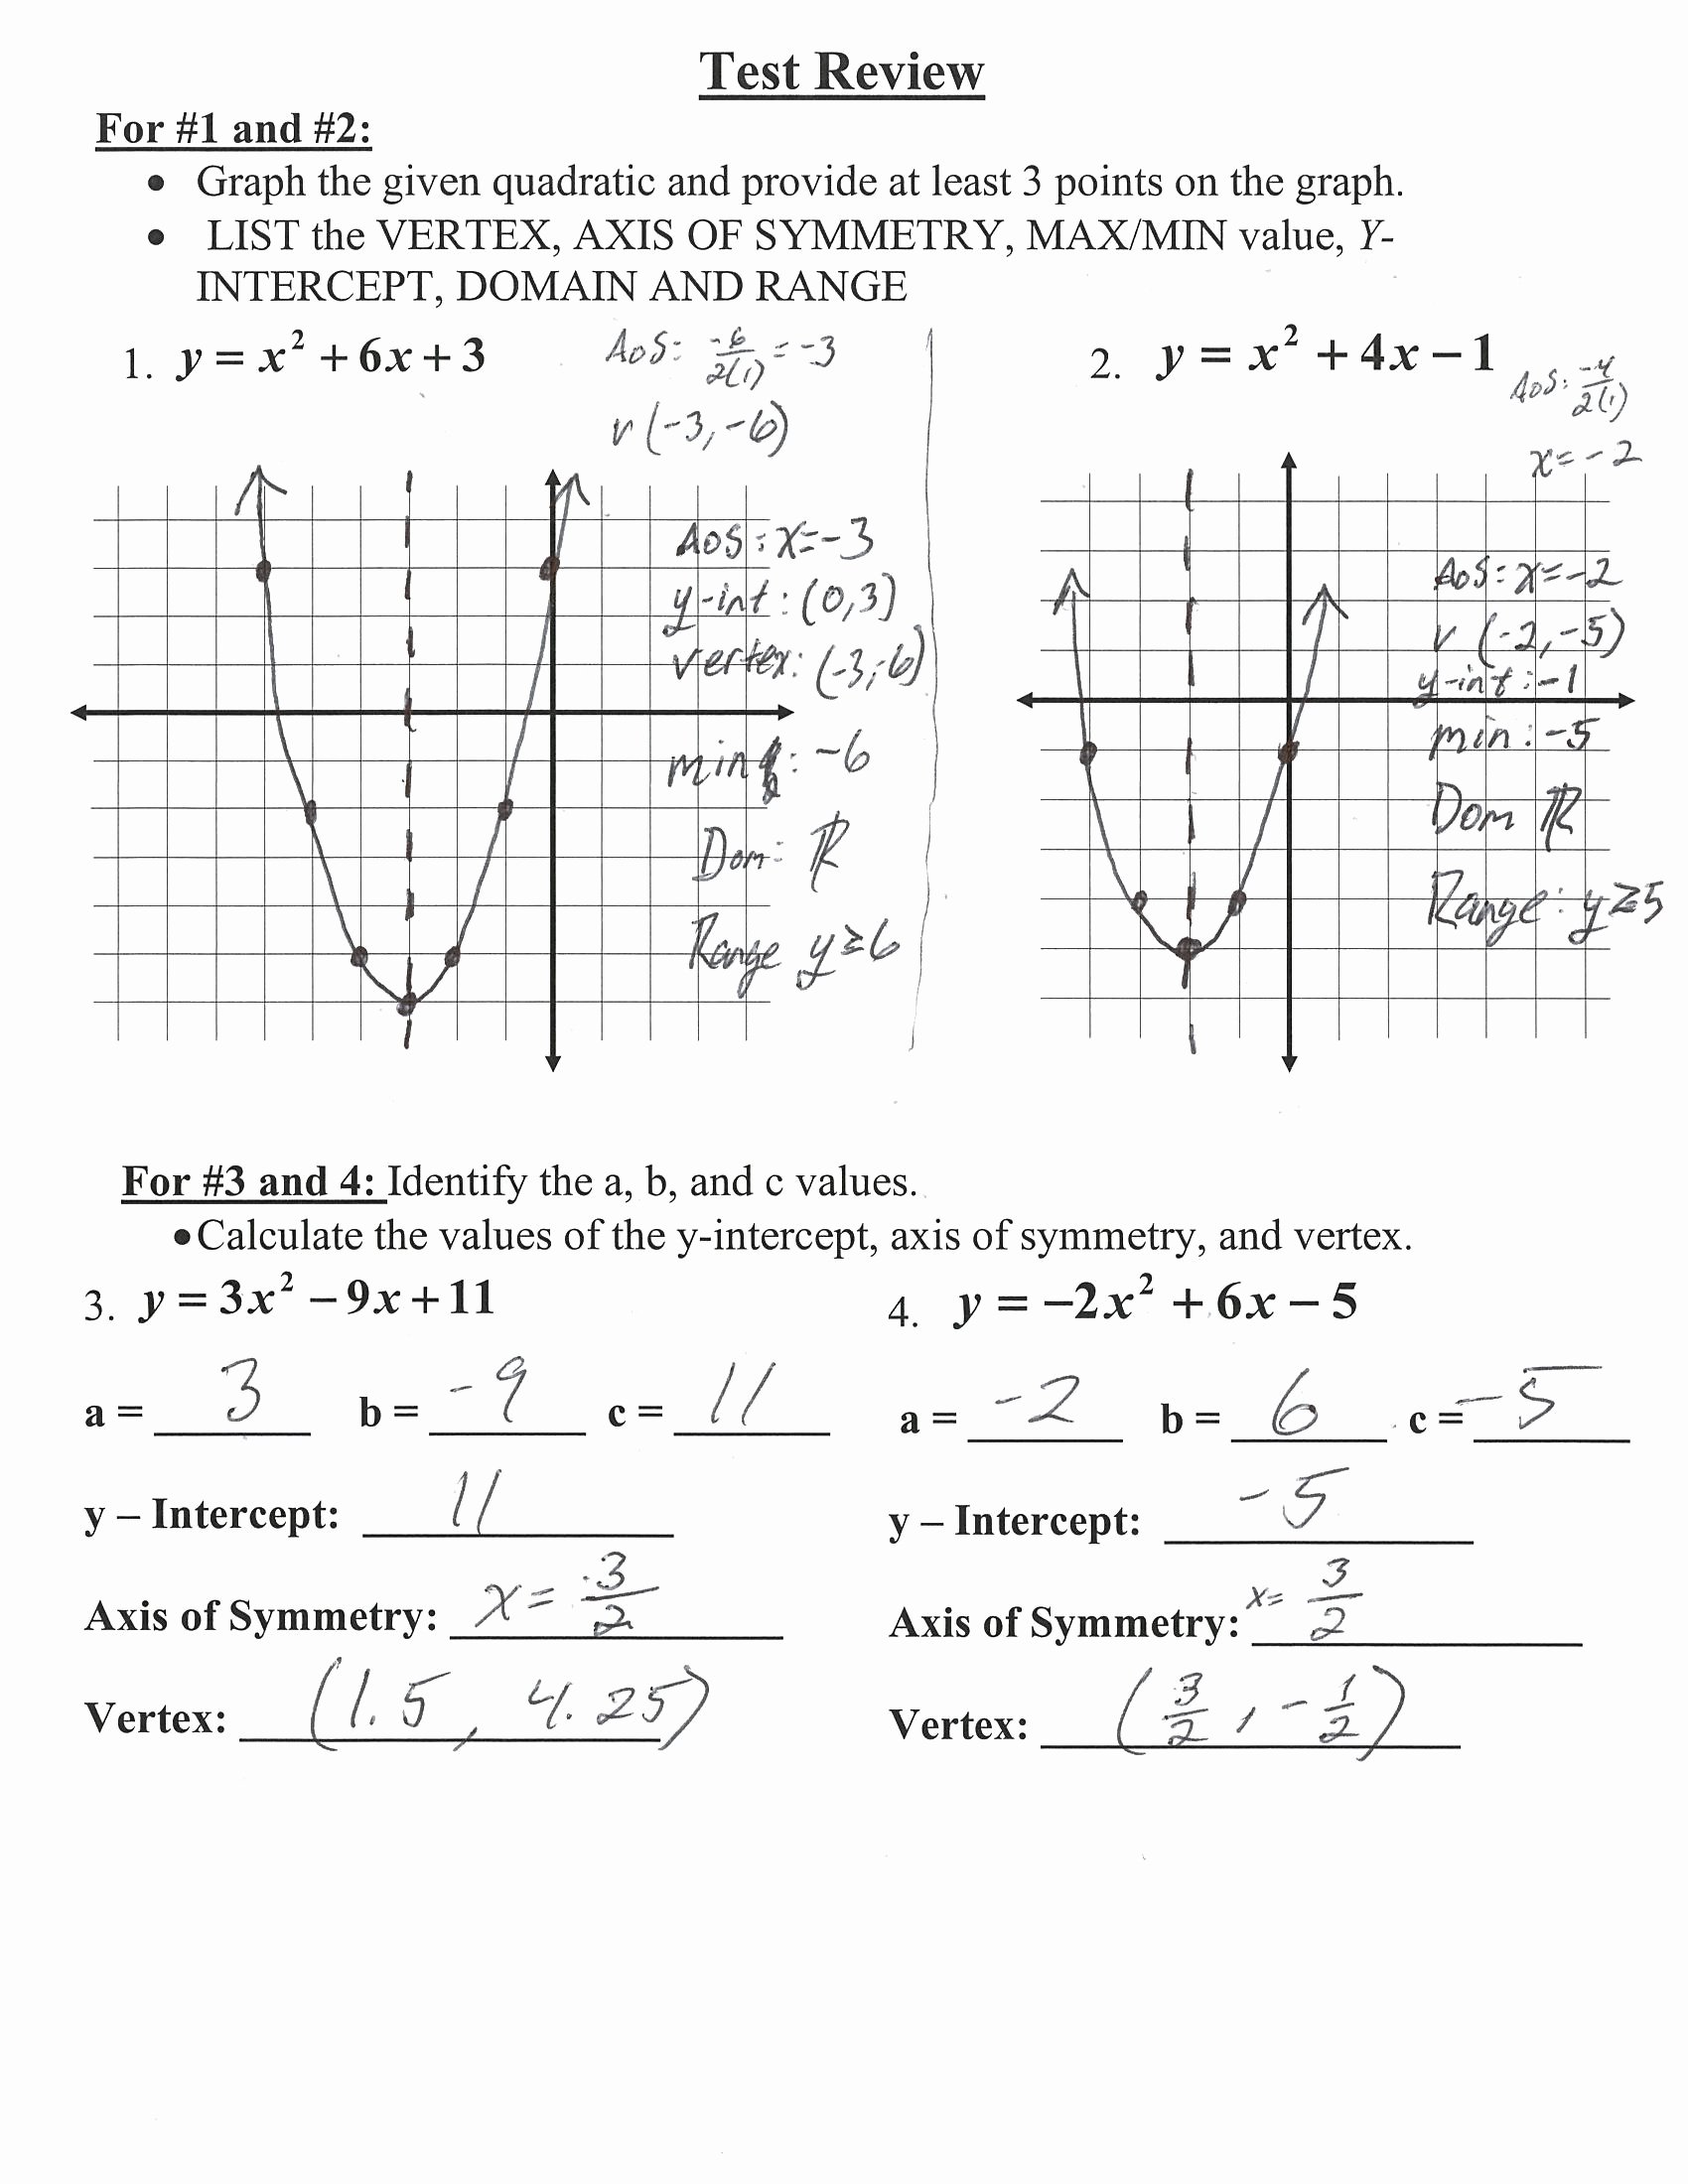 Quadratic Functions Worksheet with Answers Inspirational Algebra 1 Quadratic Test Review Answer Key